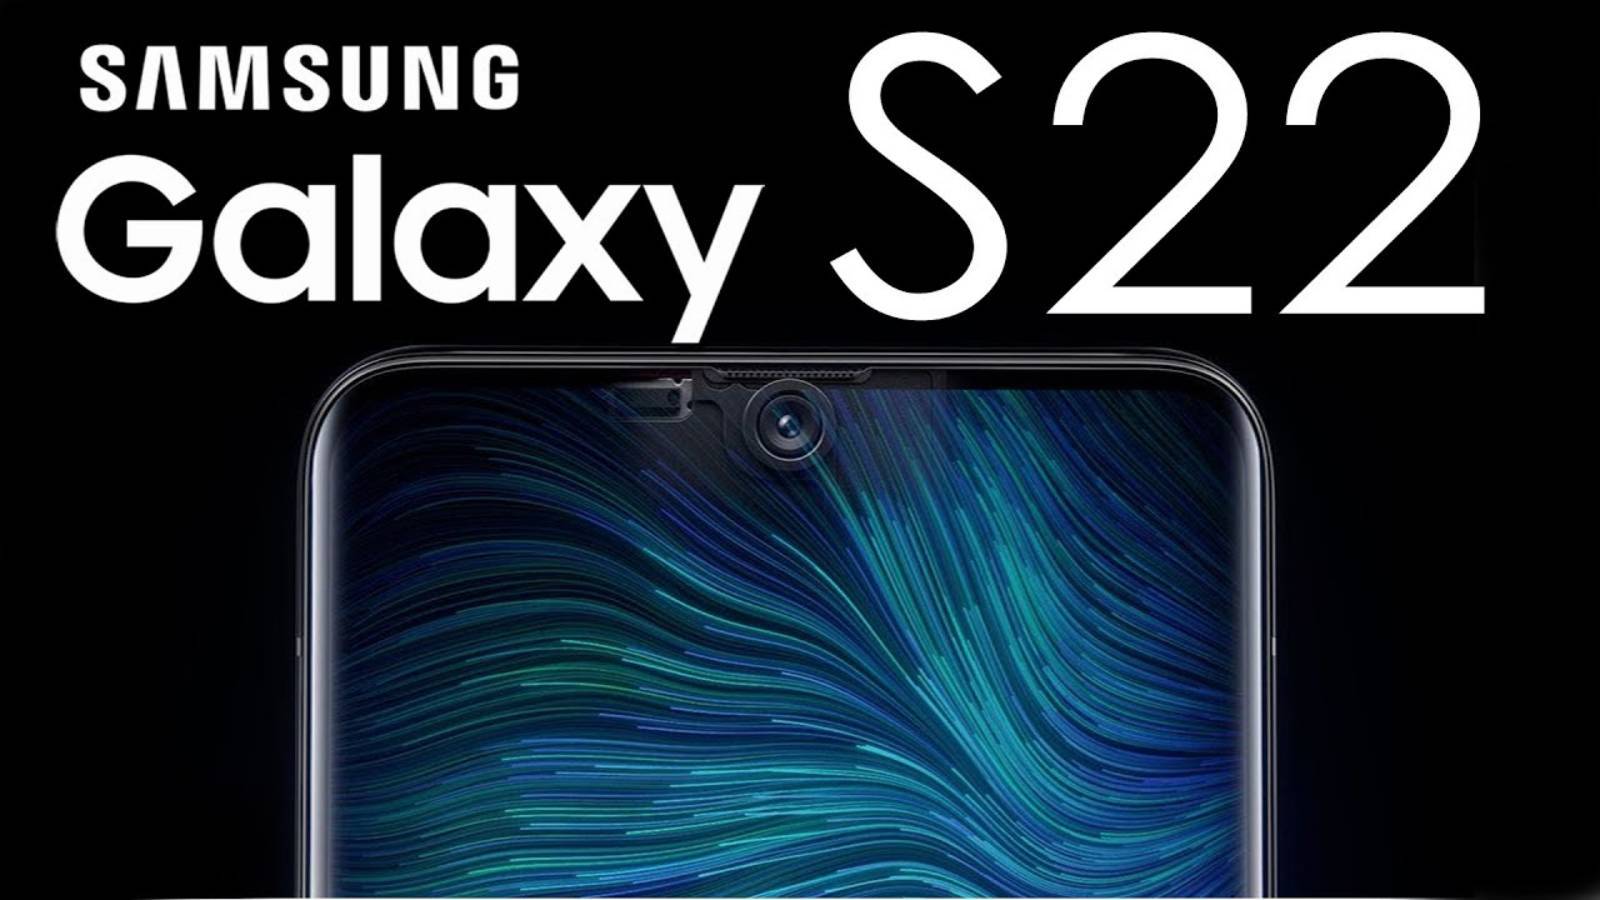 Samsung GALAXY S22 revolution